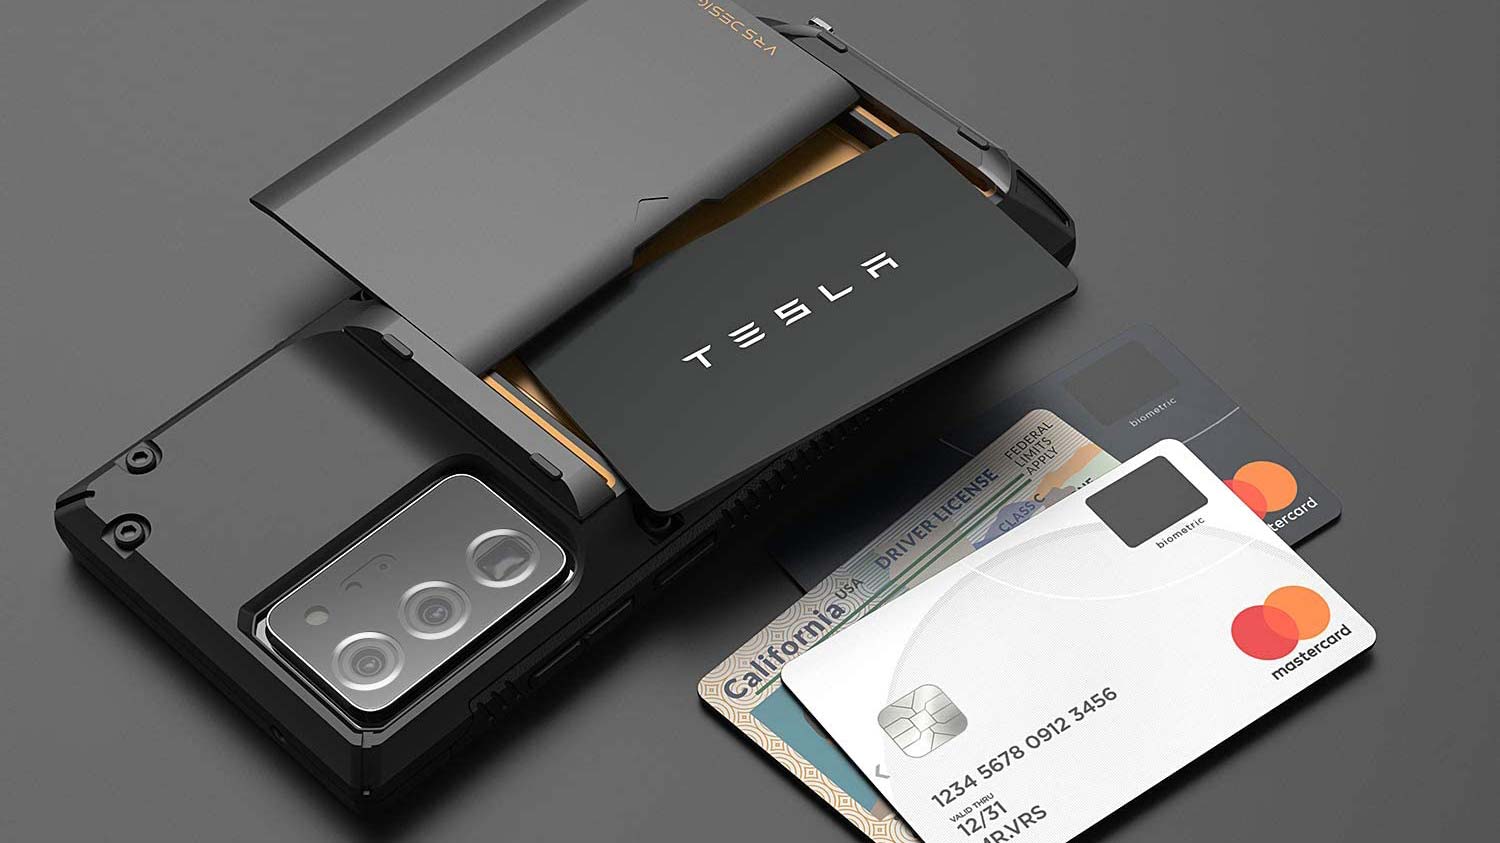 Rugged Galaxy S23 Ultra wallet case minimalist case by VRS DESIGN – VRS  Design